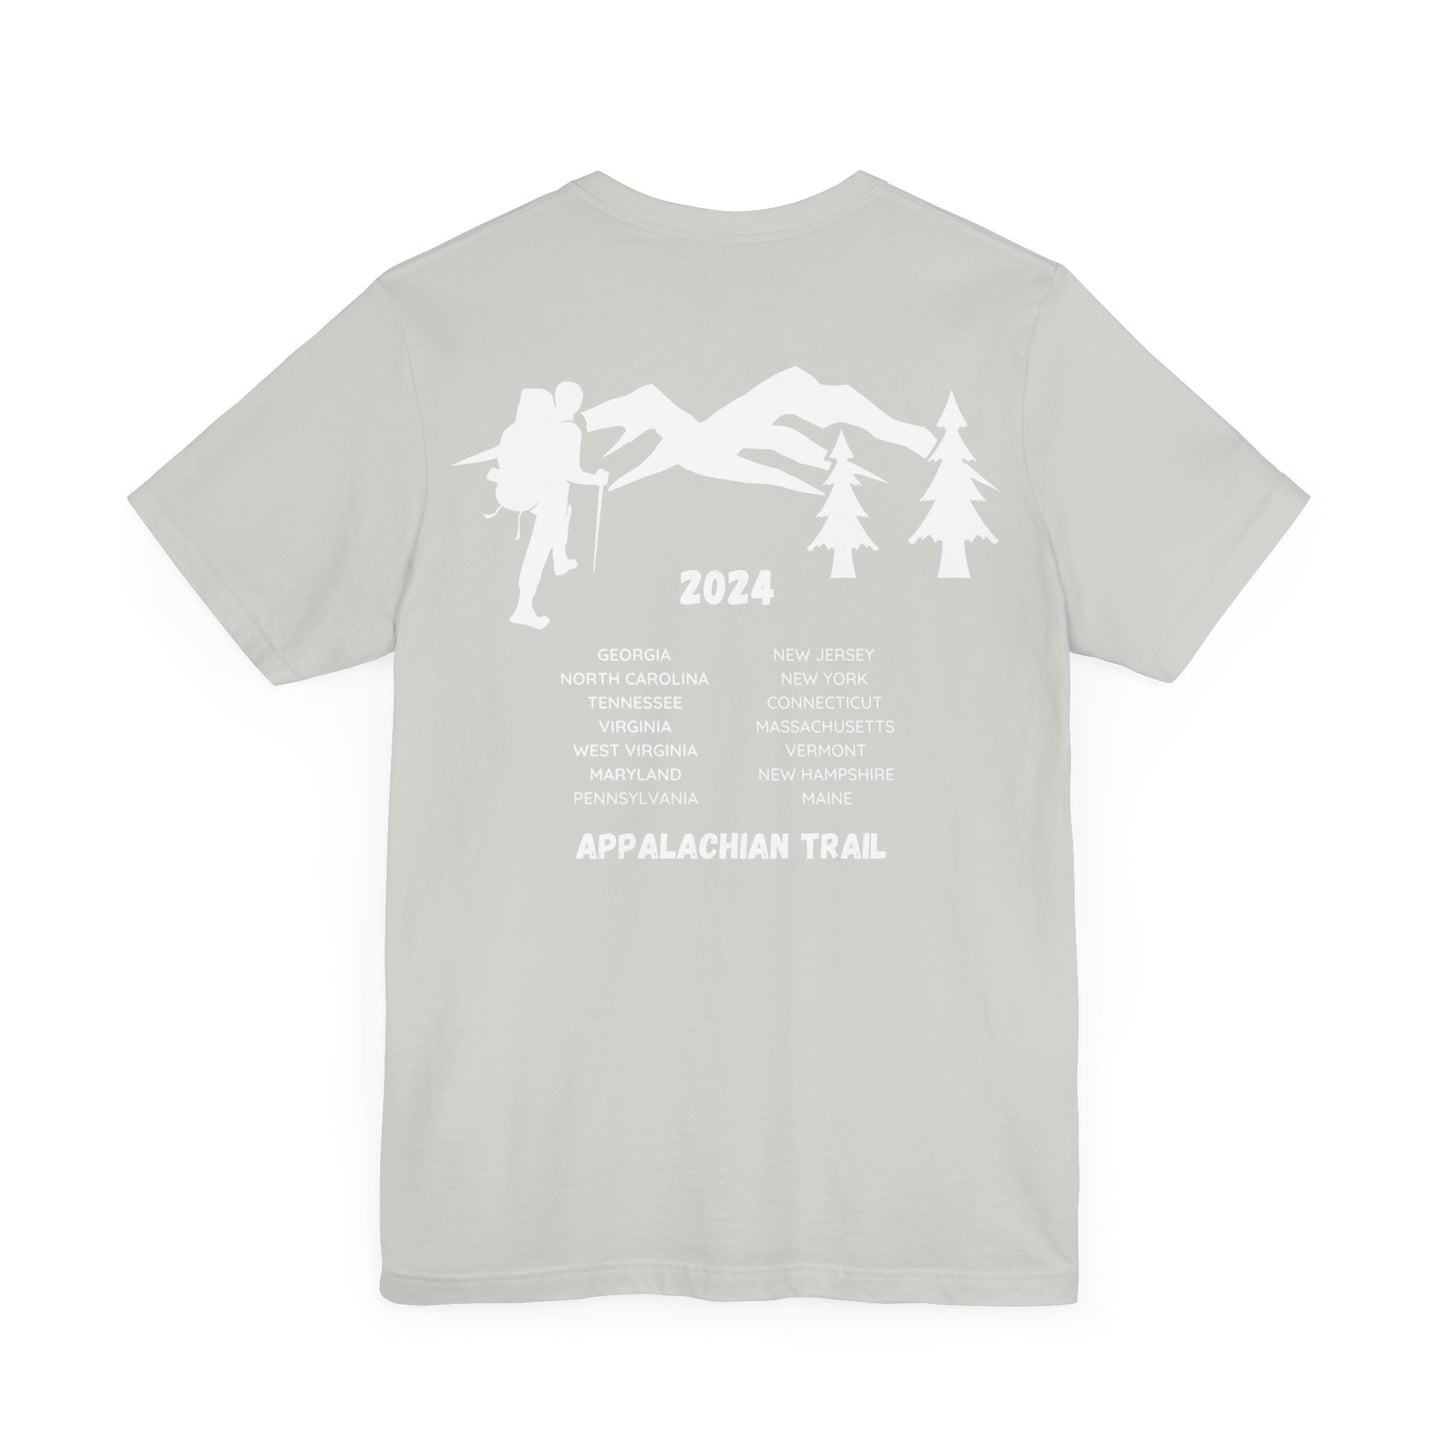 Appalachian Trail Tshirt "I hiked it"